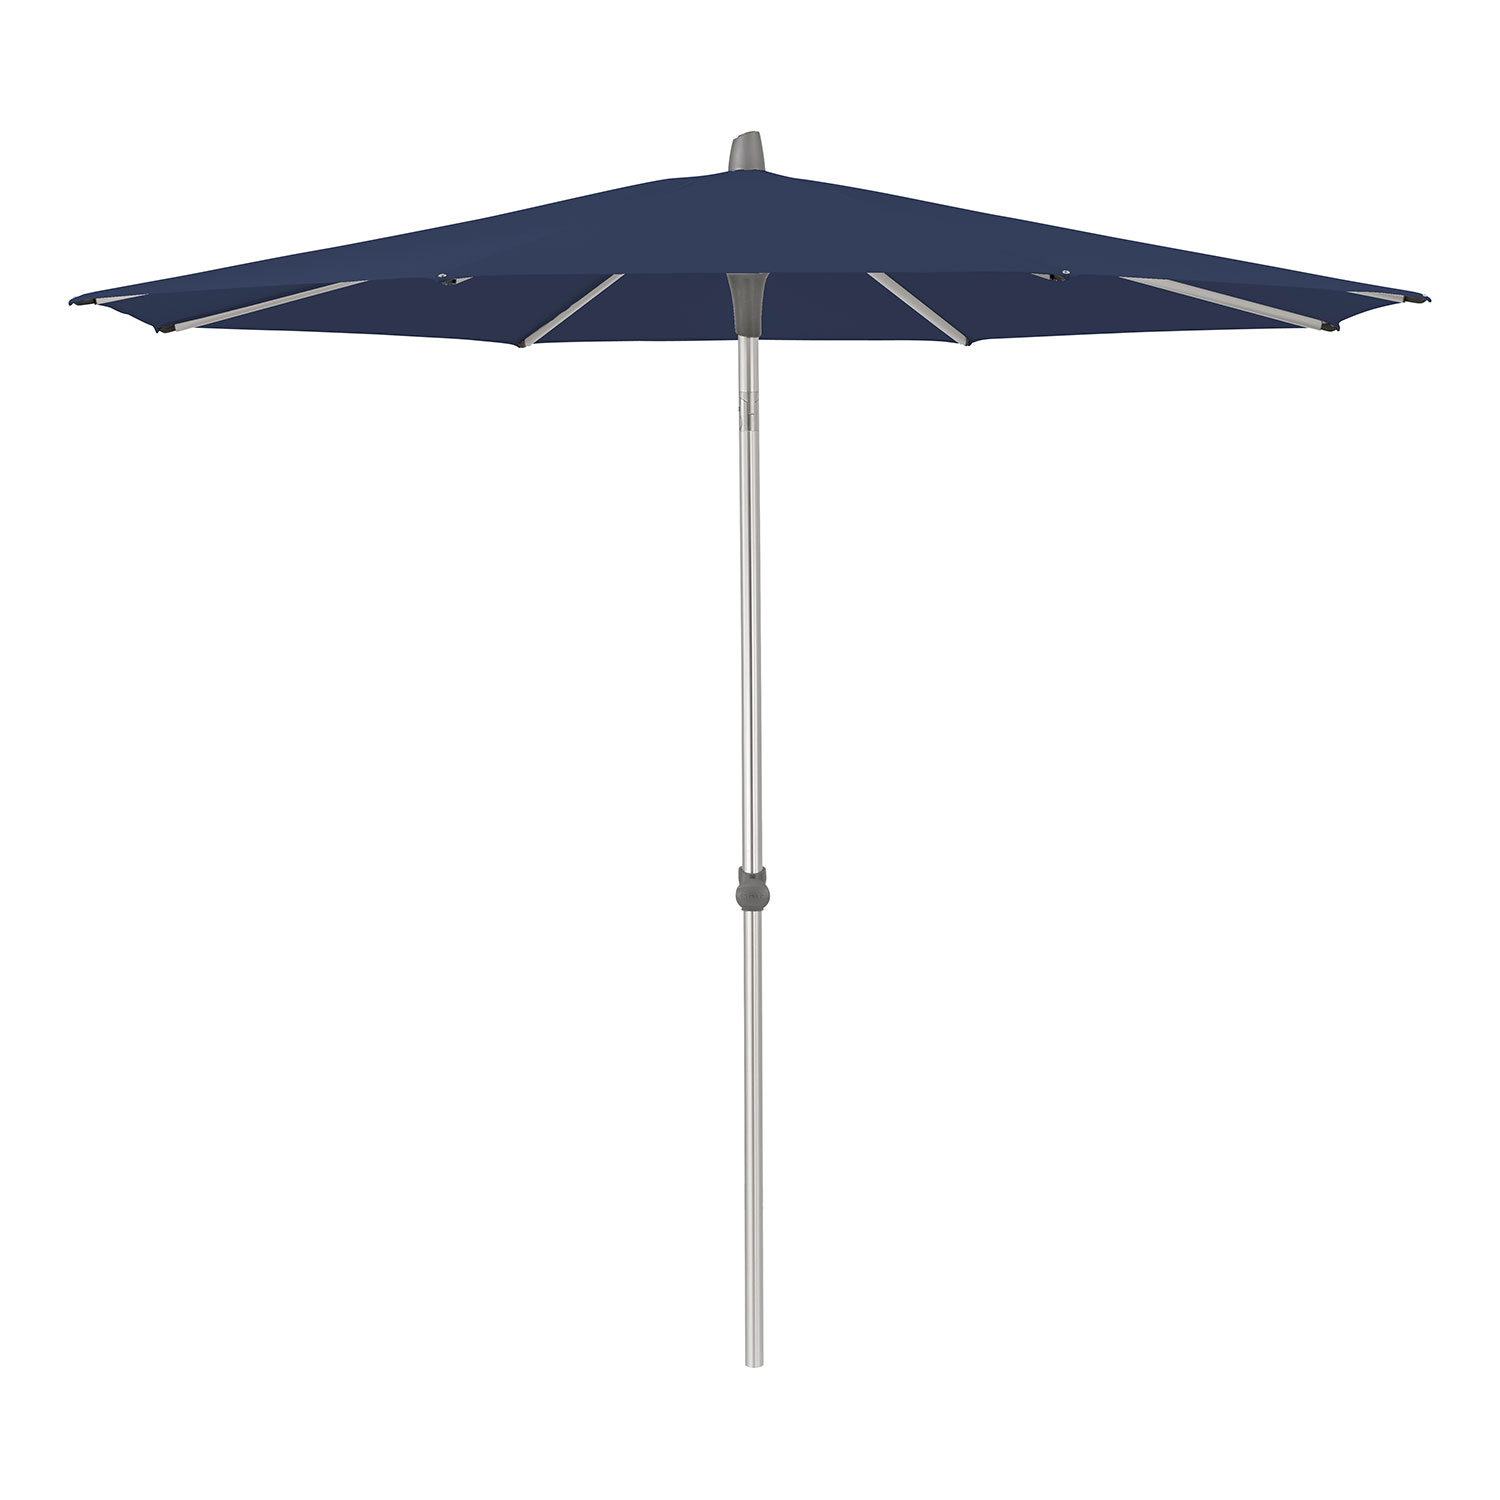 Glatz Alu-smart parasoll 220 cm kat.5 530 atlantic